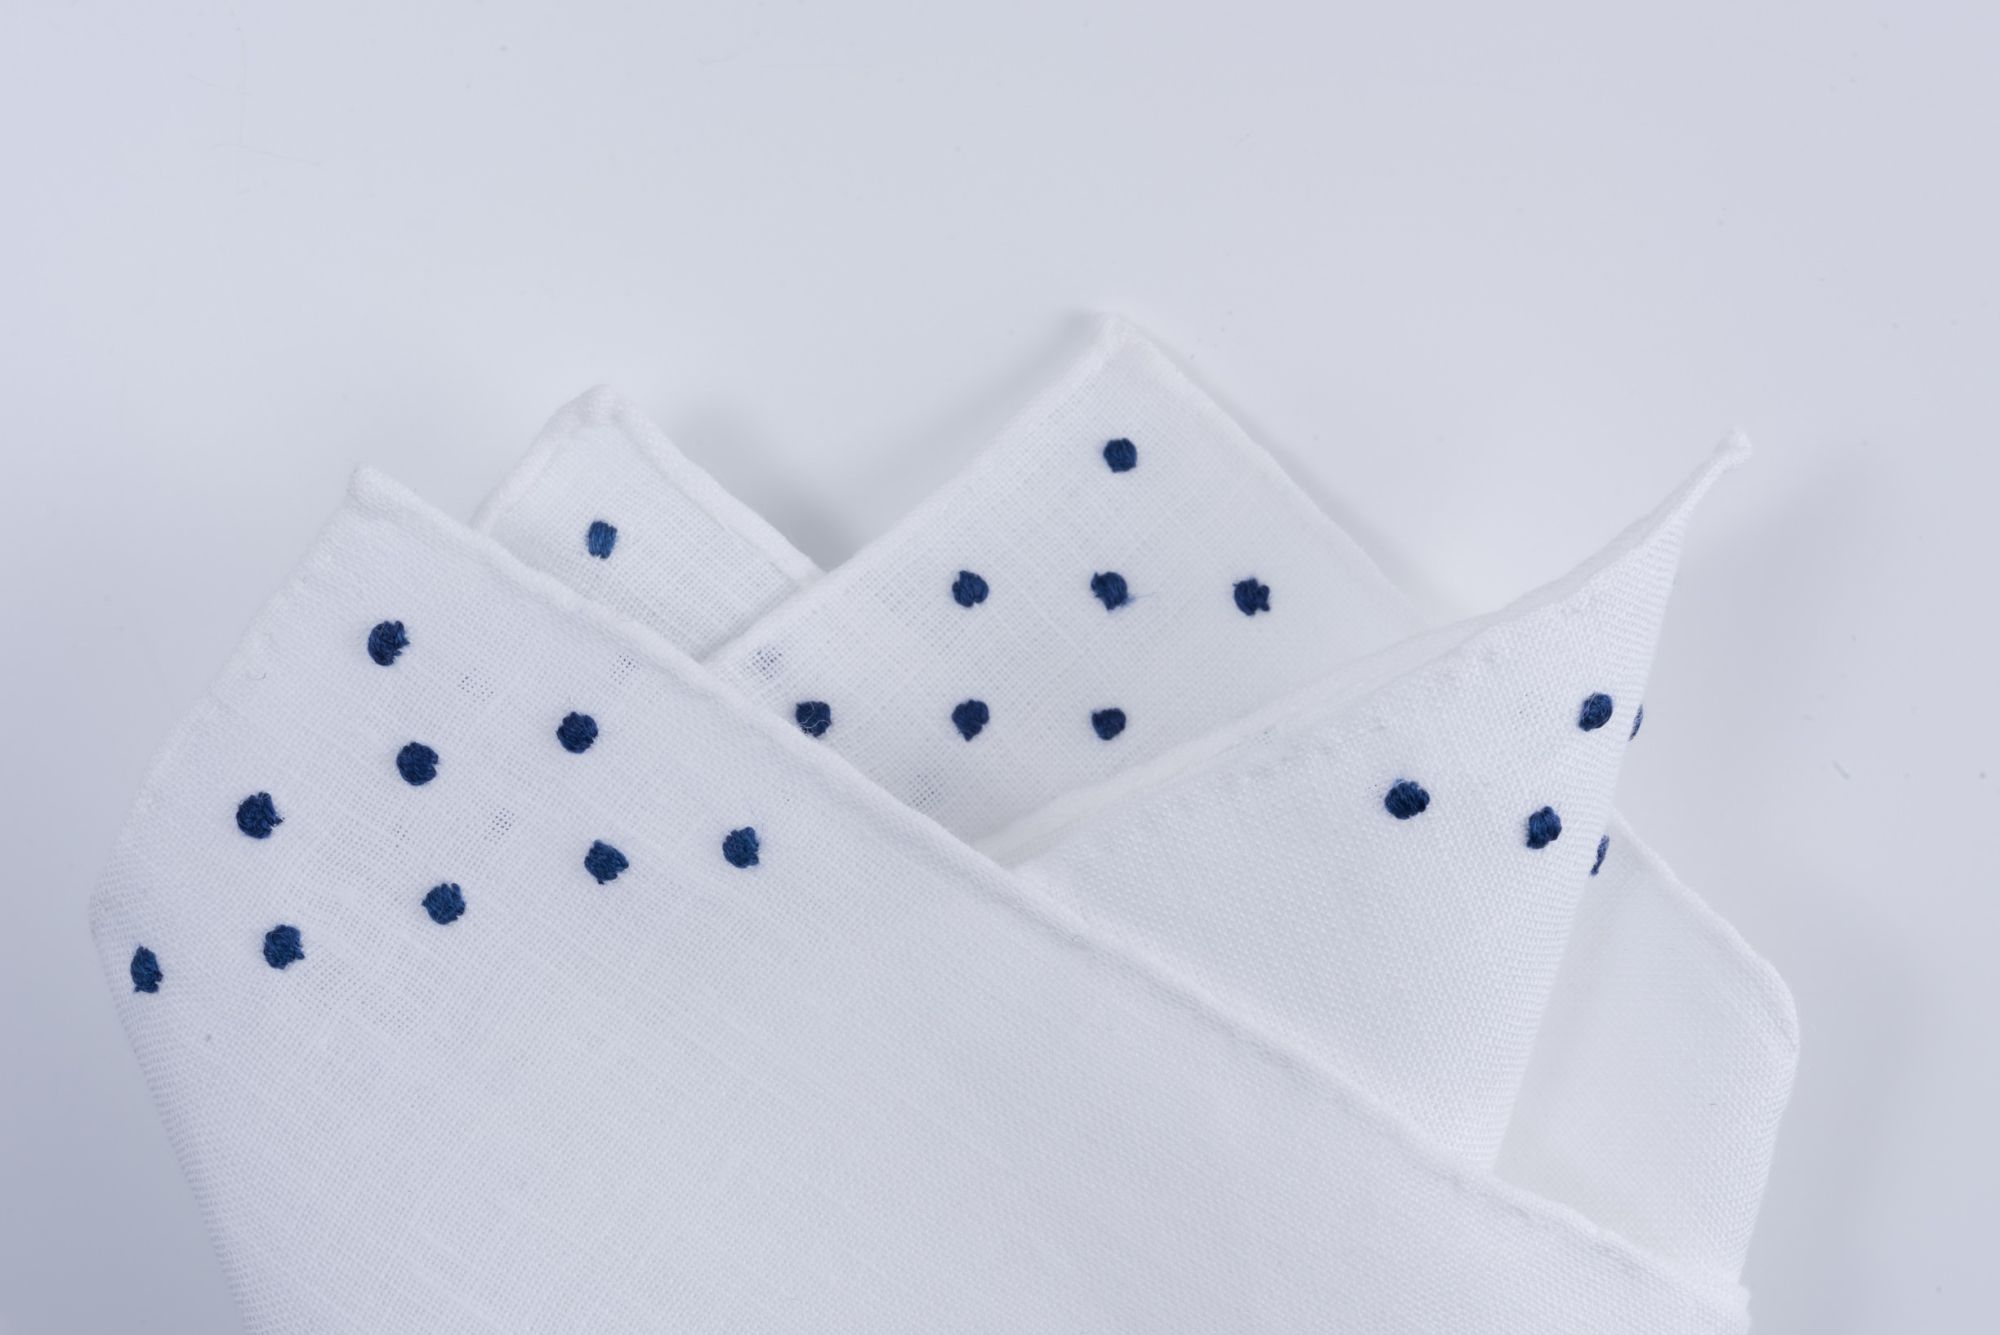 Silk mens top pocket handkerchief White polka dots on navy blue background   NEW 